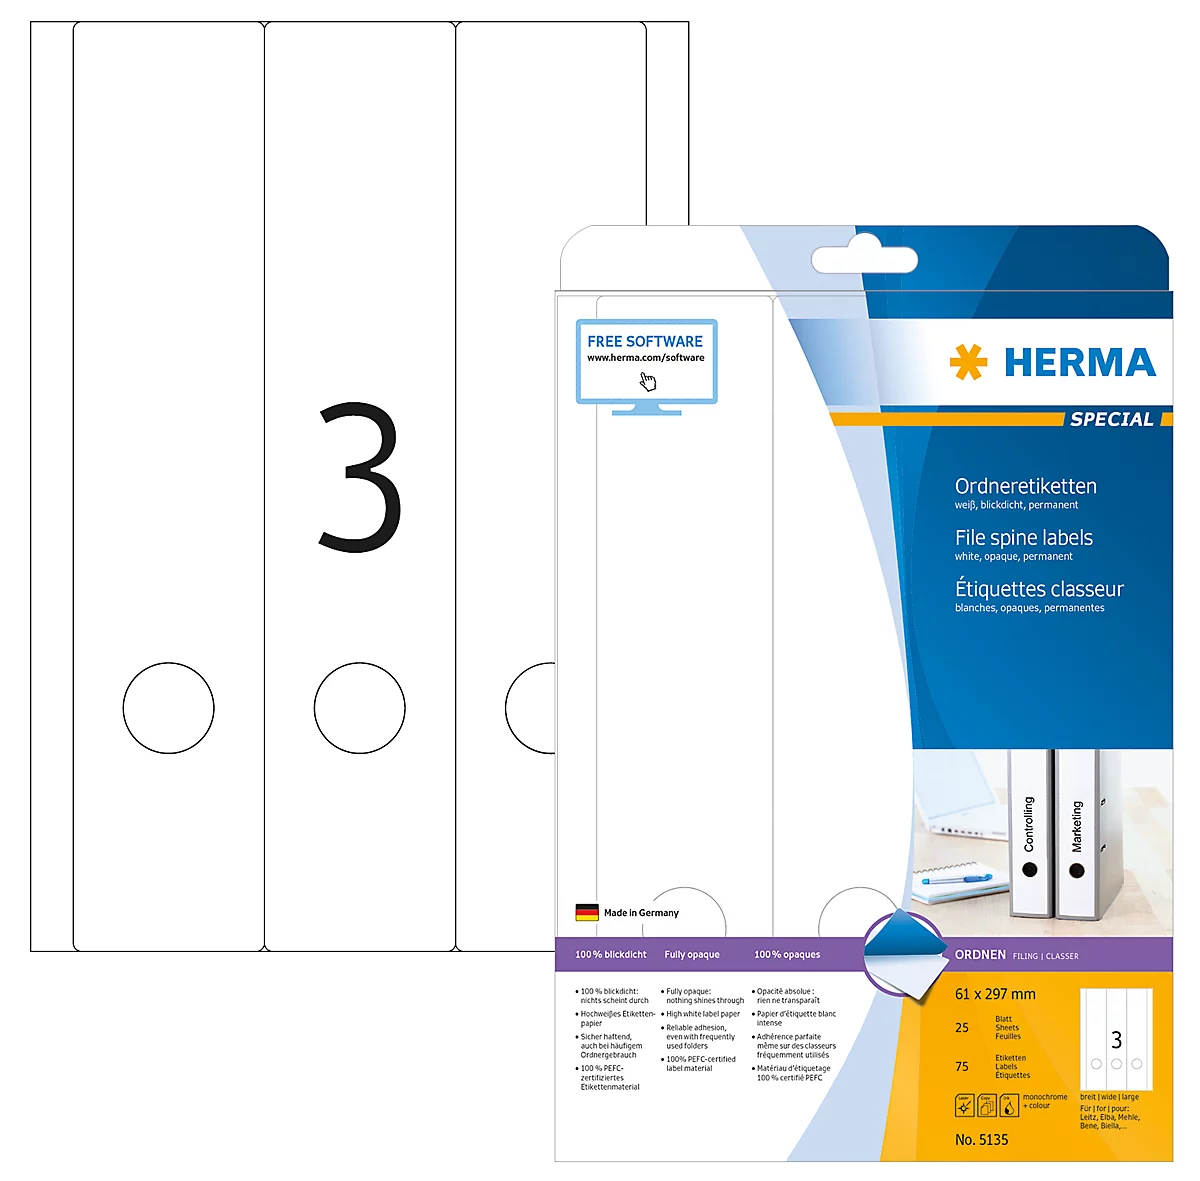 Herma Ordneretiketten A4, 297 x 61 mm, permanent haftend/bedruckbar, 75 Stück, weiß